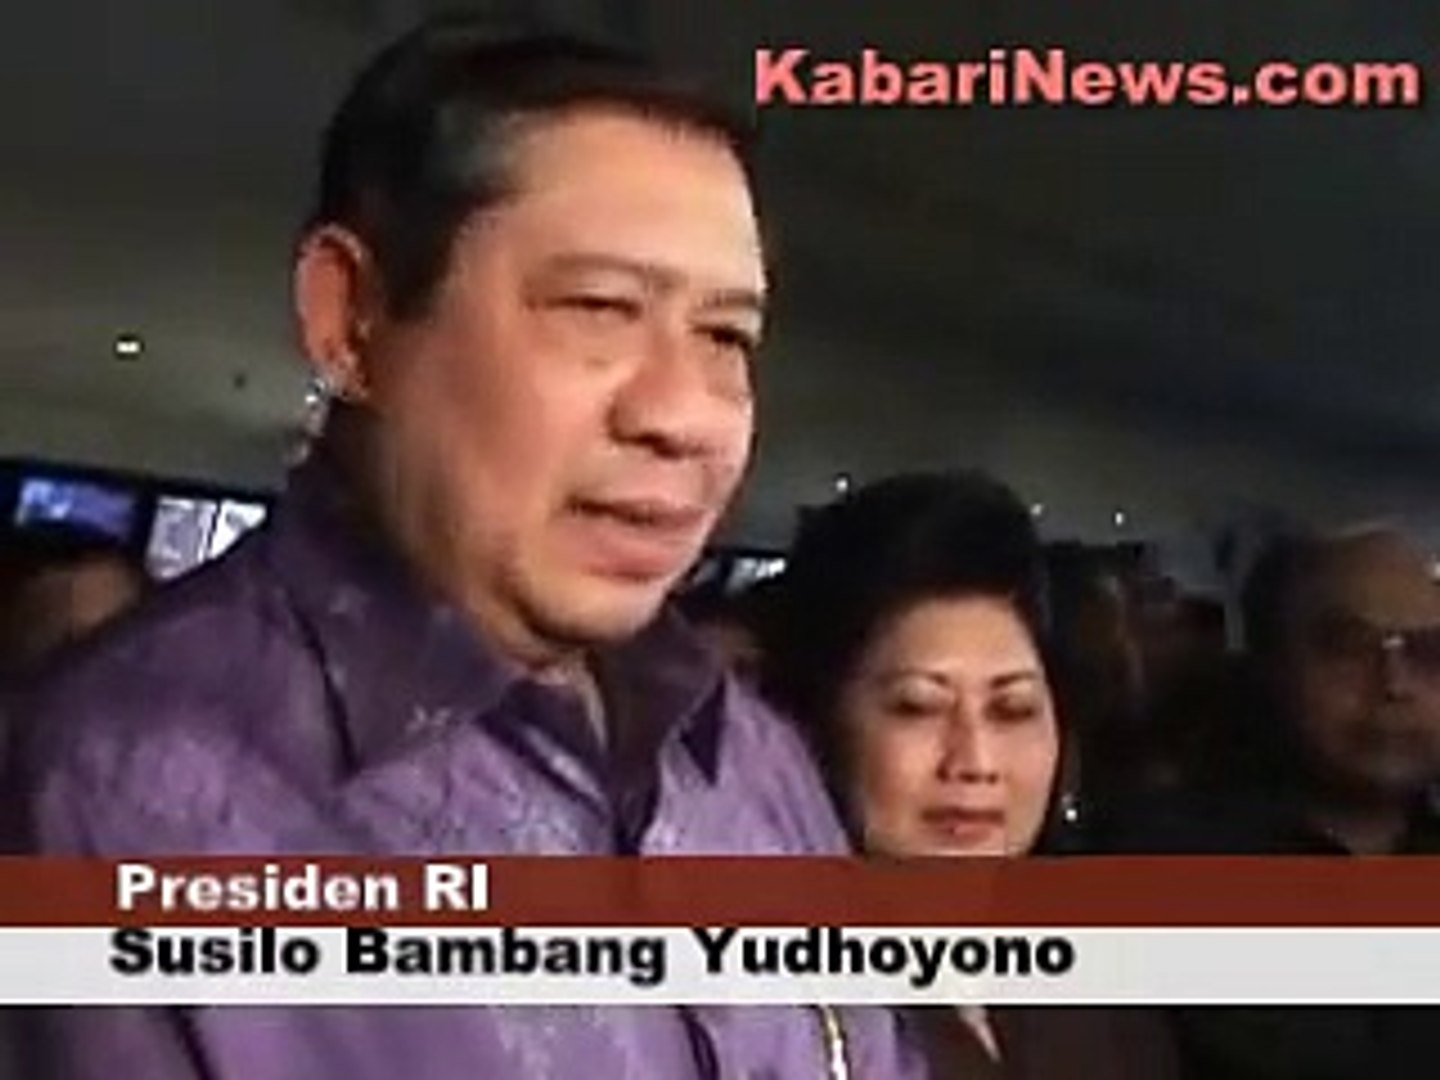 ⁣Presiden SBY nonton film Laskar Pelangi, KabariNews.com-Jembatan Informasi Indonesia Amerika